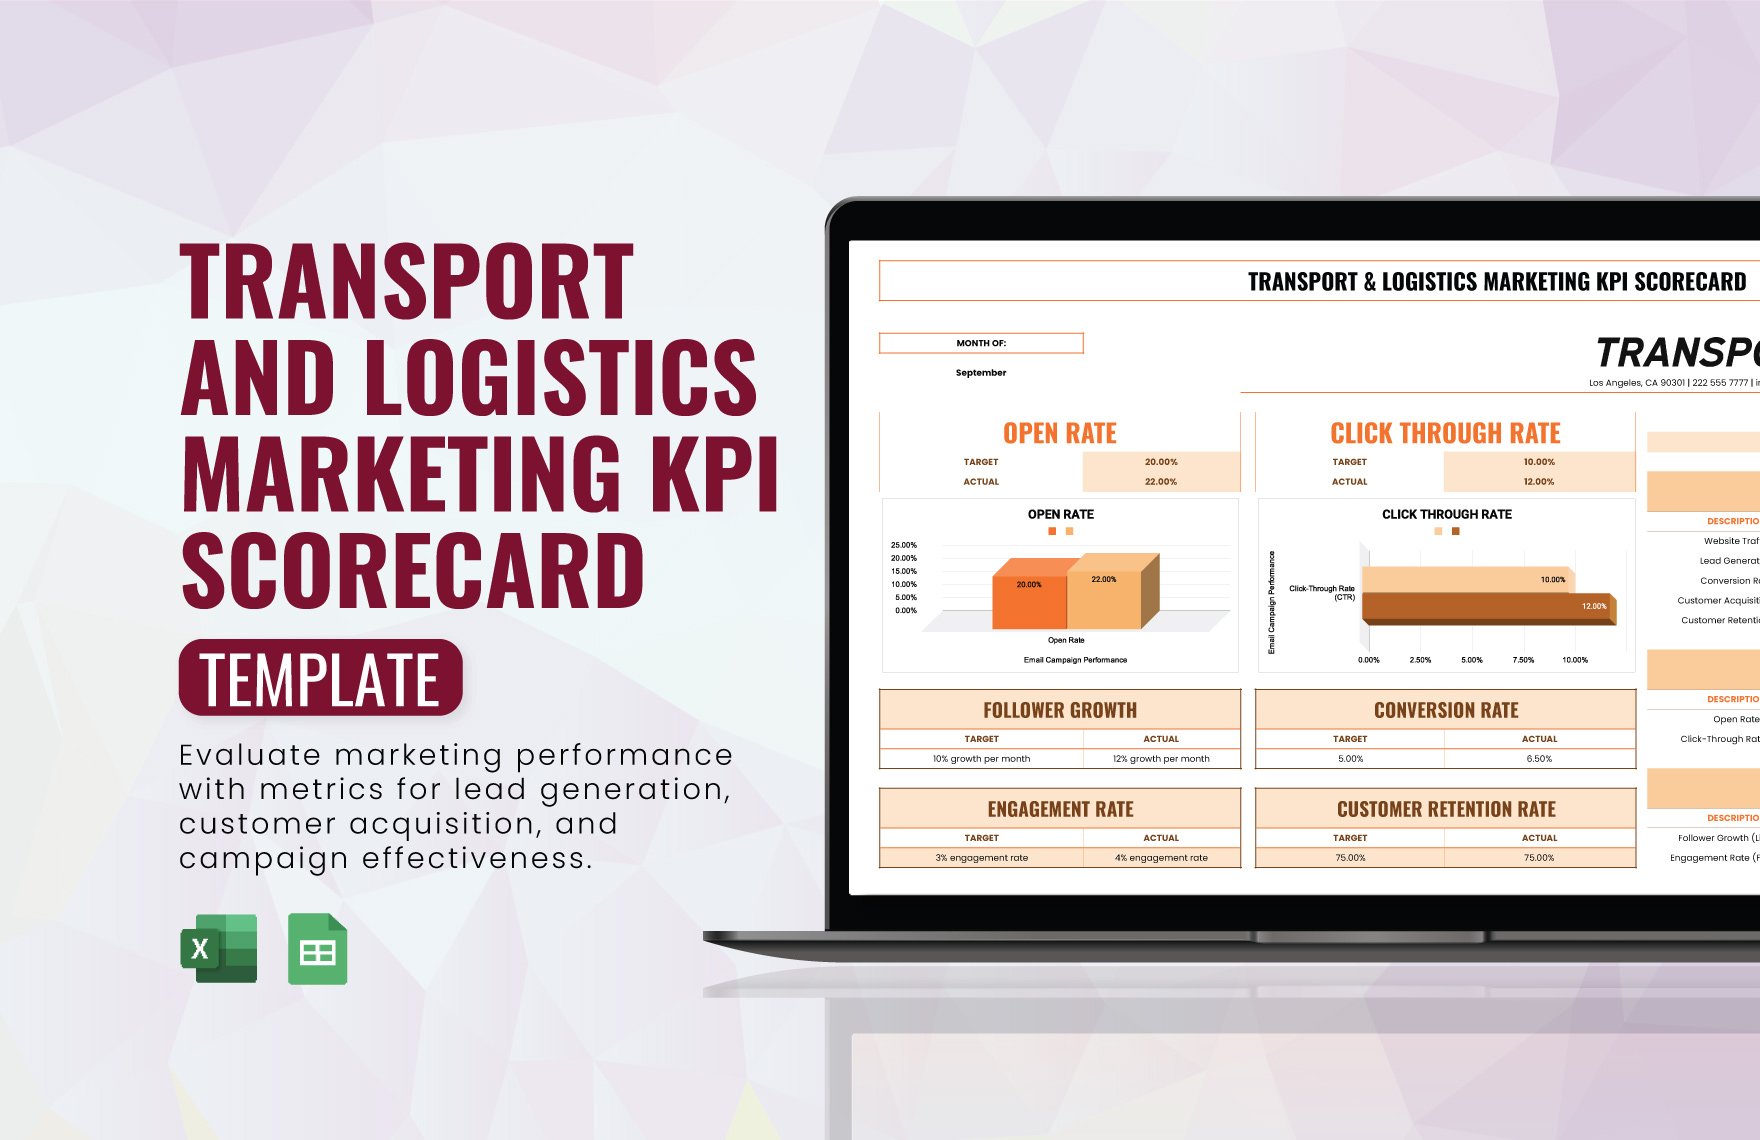 Free Transport and Logistics Marketing KPI Scorecard Template in Excel, Google Sheets